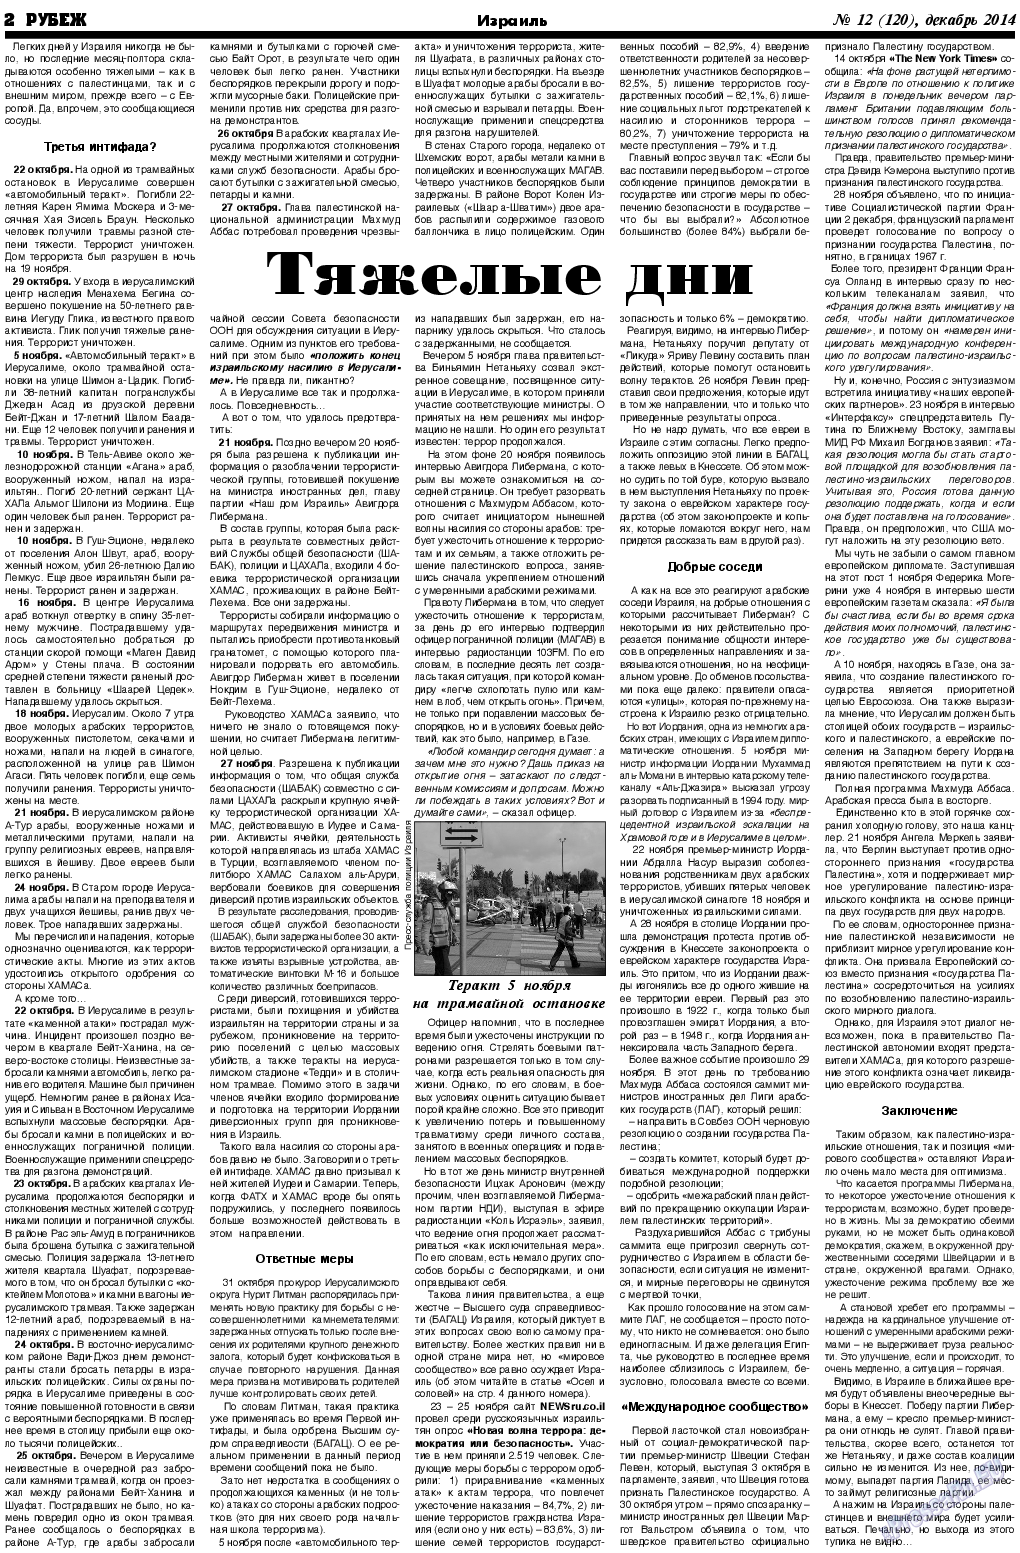 Рубеж, газета. 2014 №12 стр.2